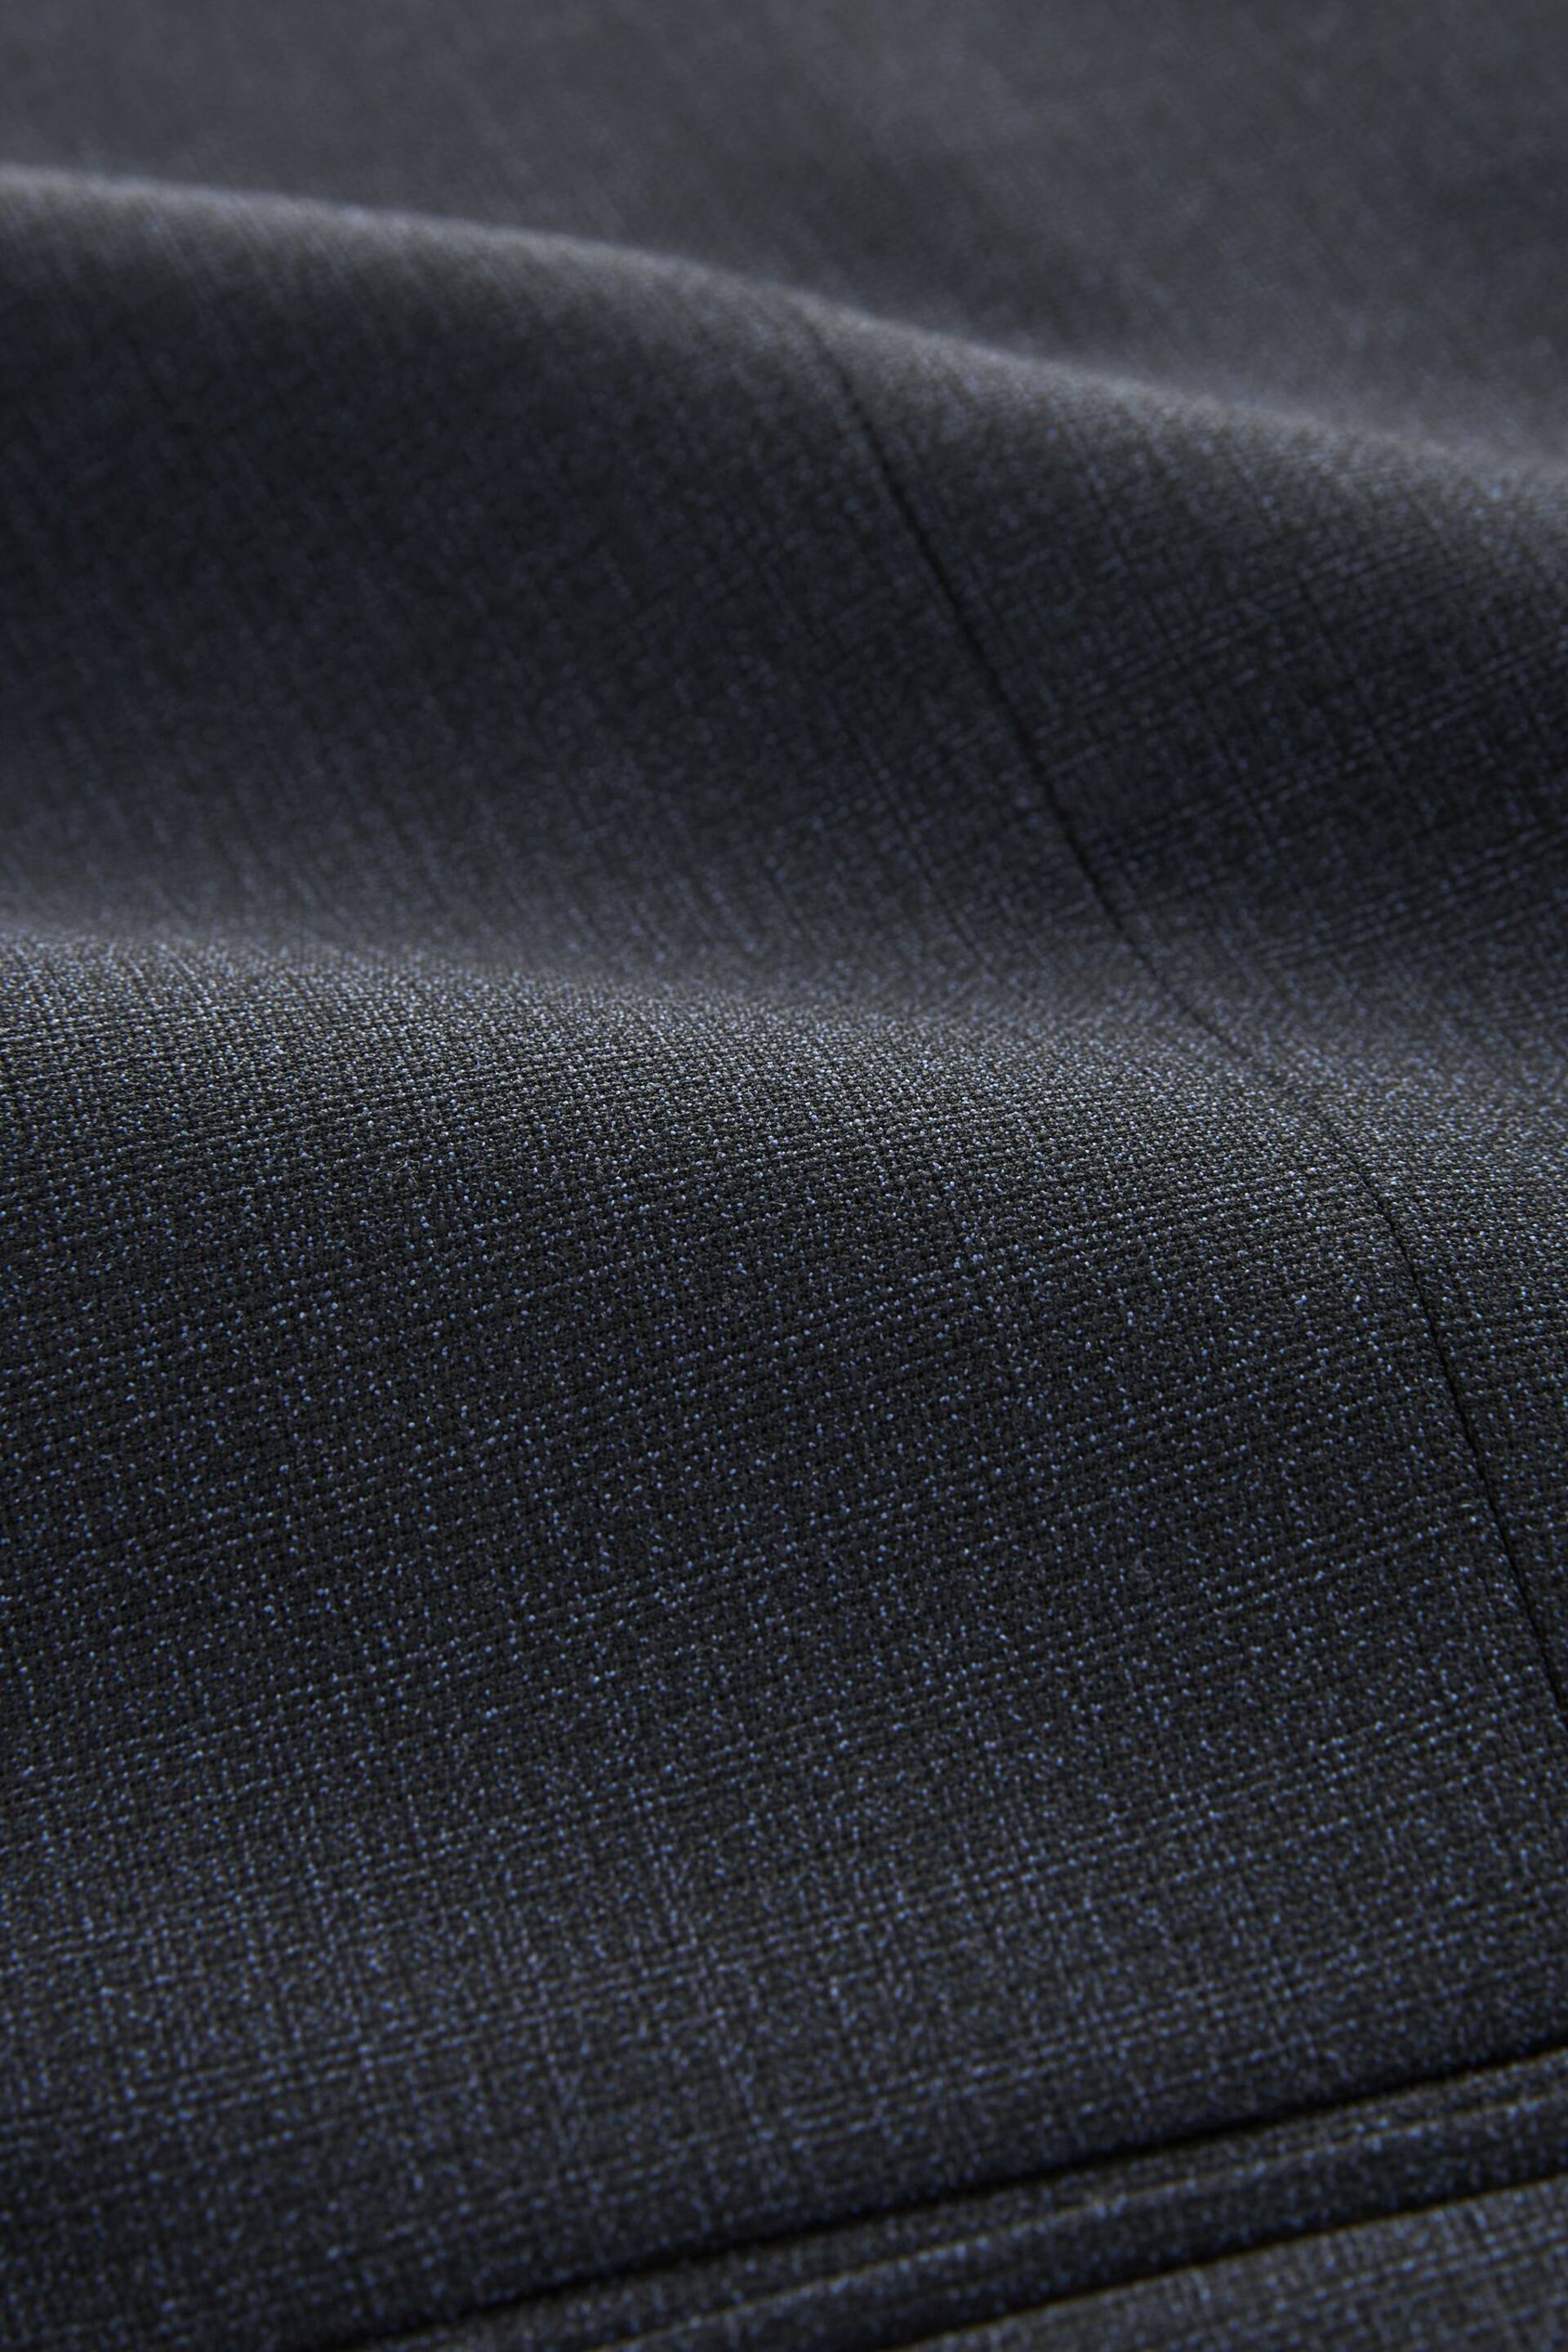 Navy Textured Wool Suit: Waistcoat - Image 6 of 10